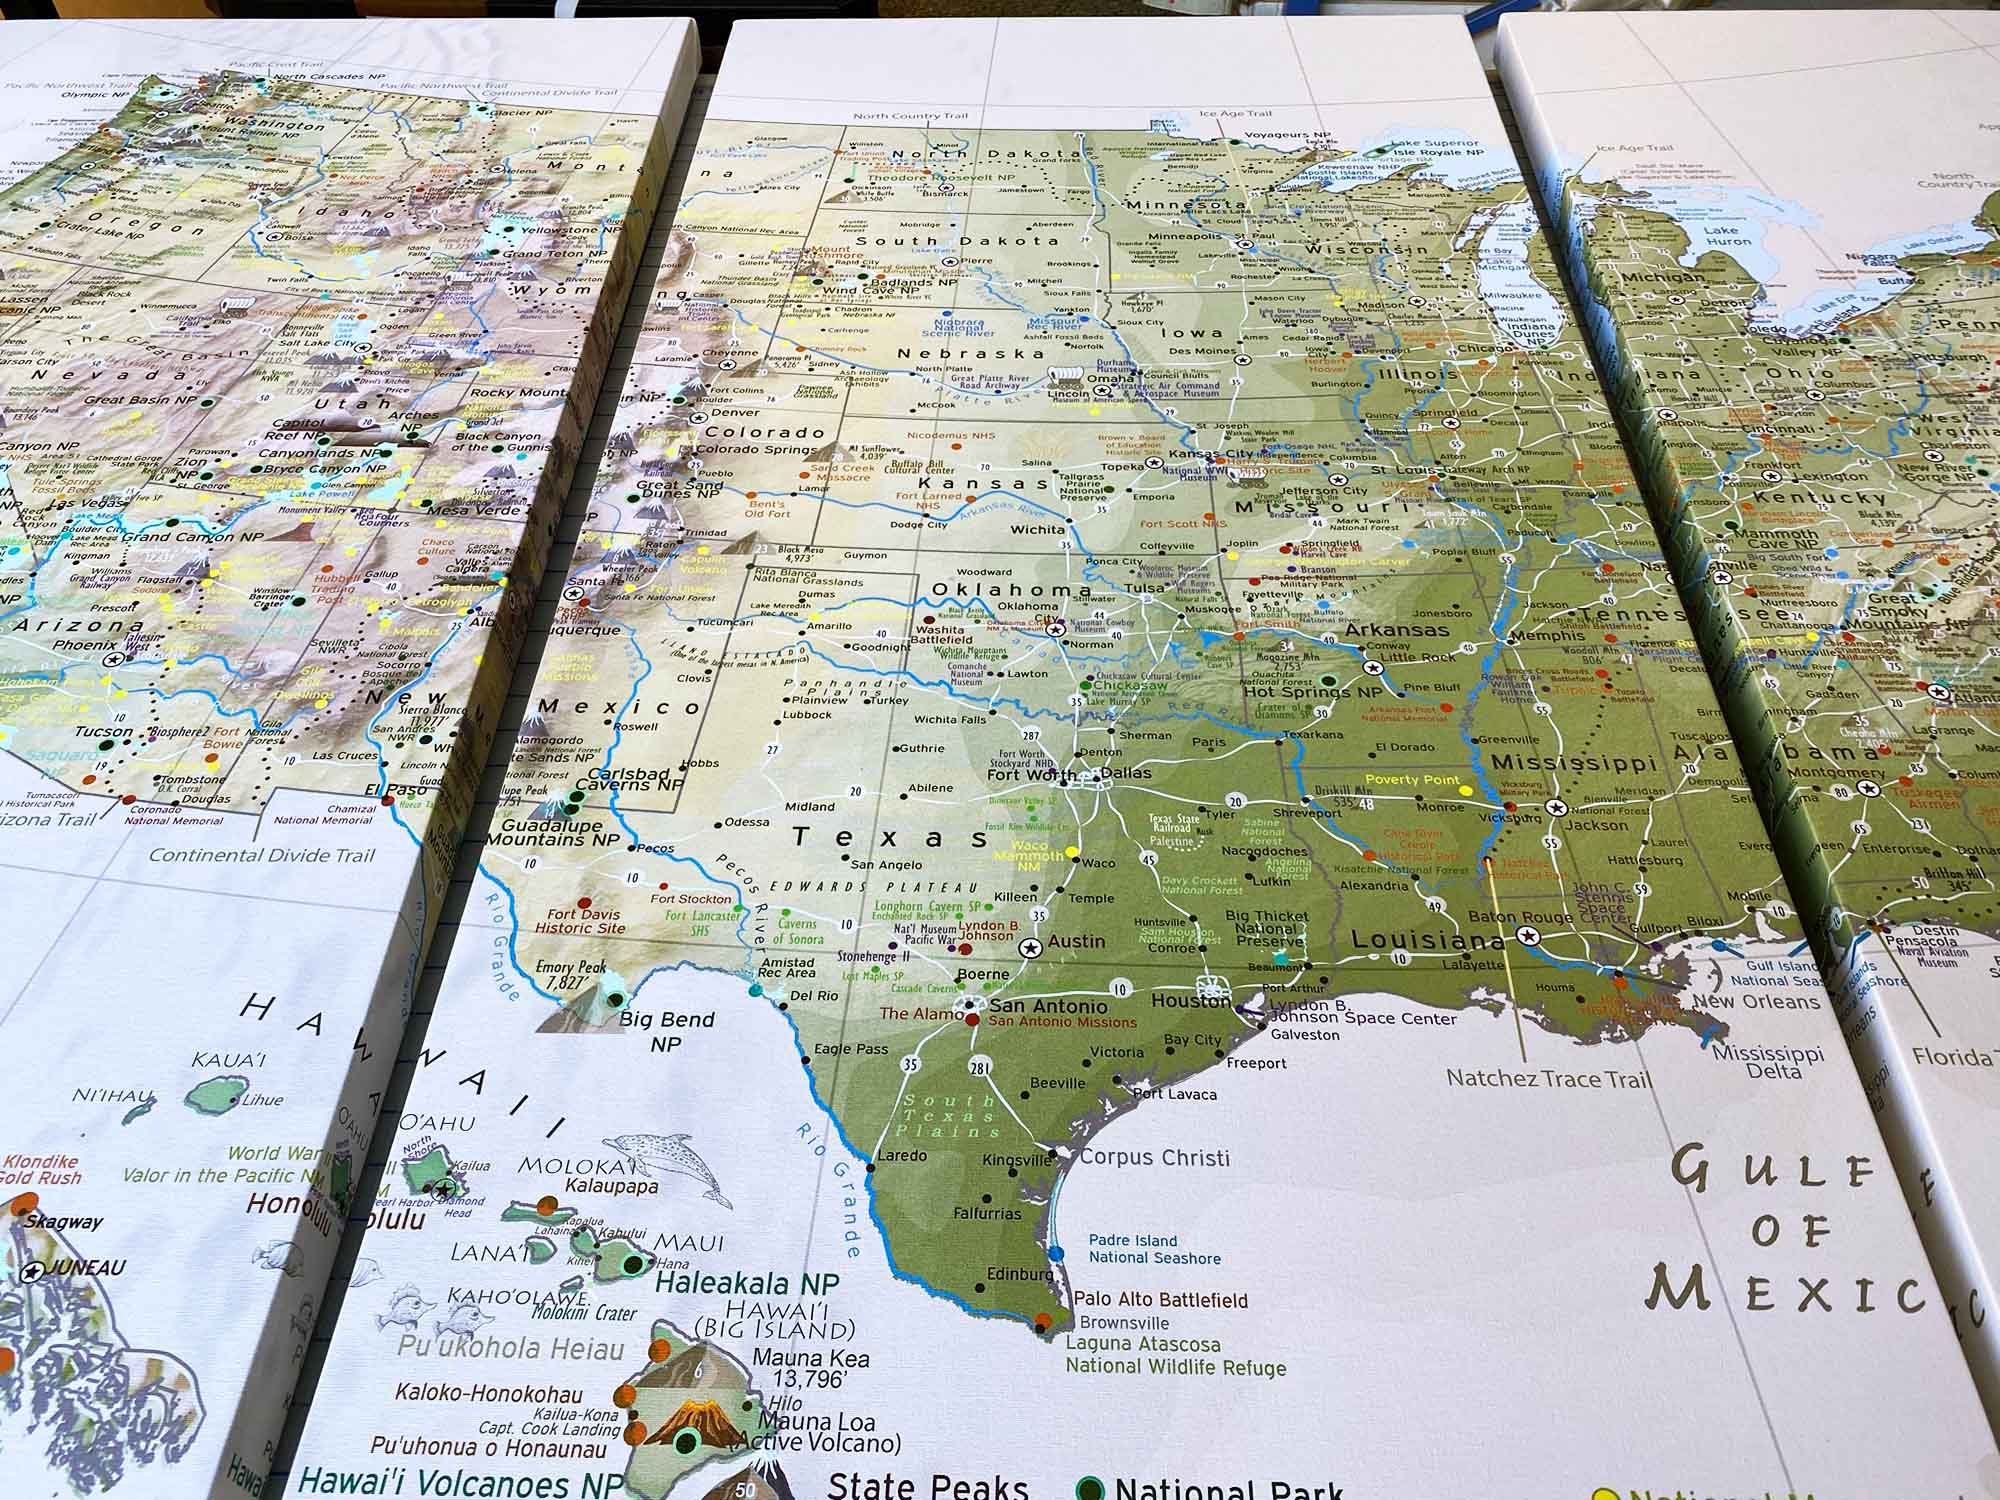 USA canvas wrap maps